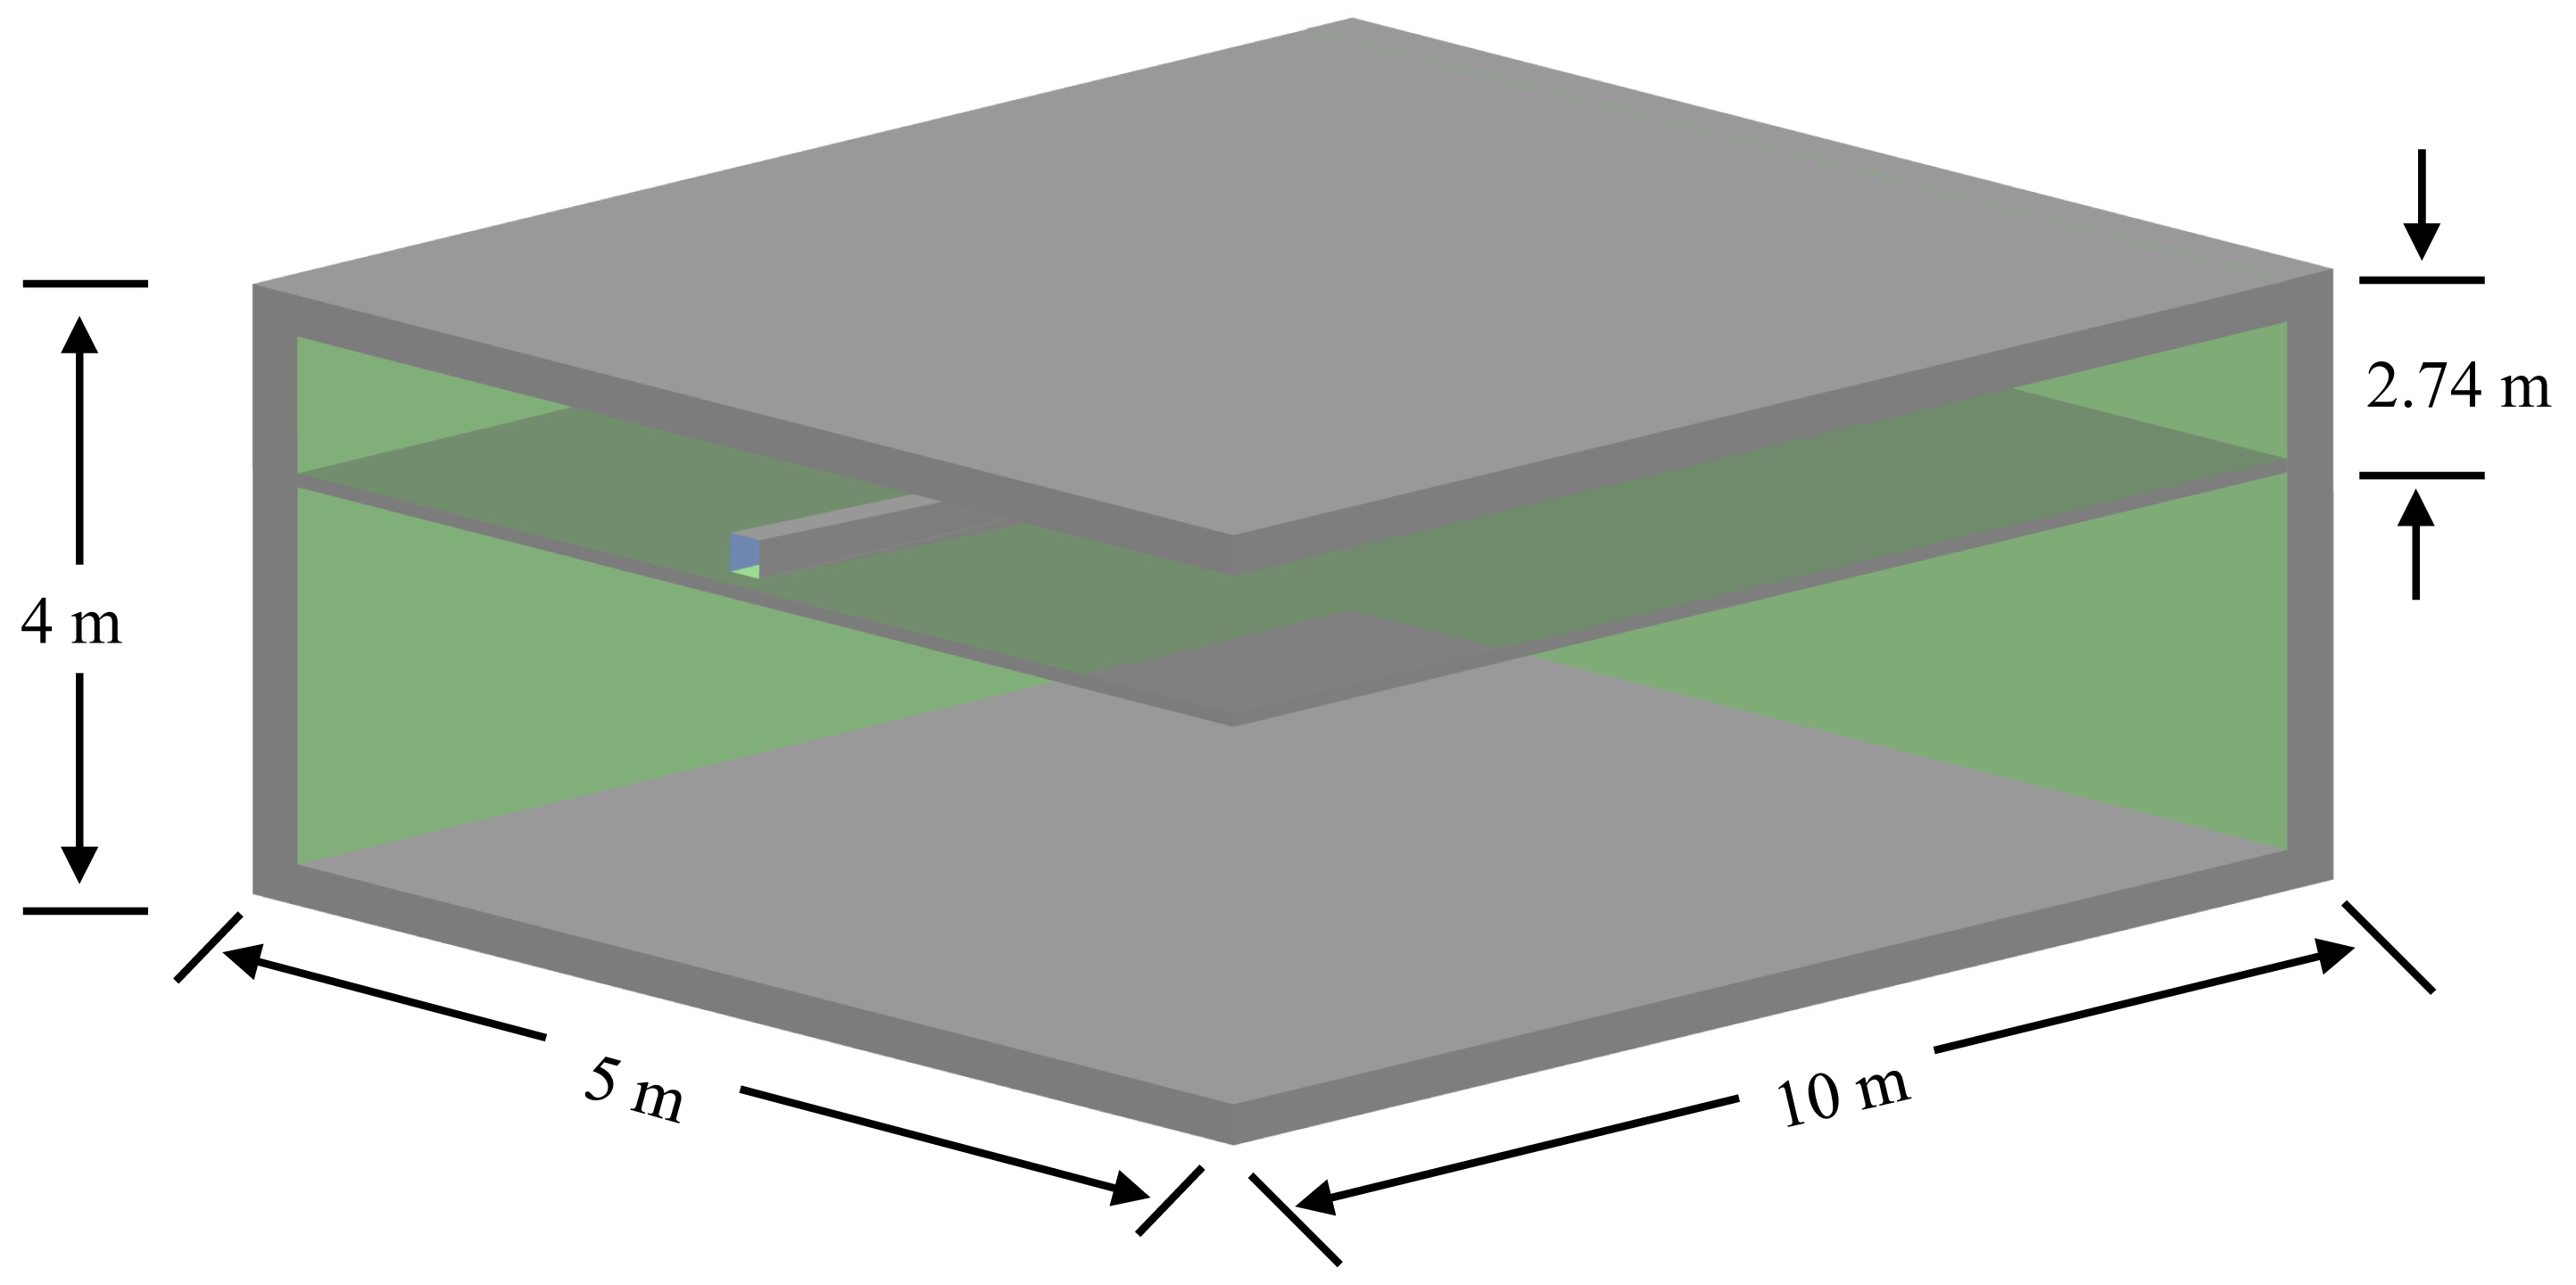 Schematic showing floor dimensions.